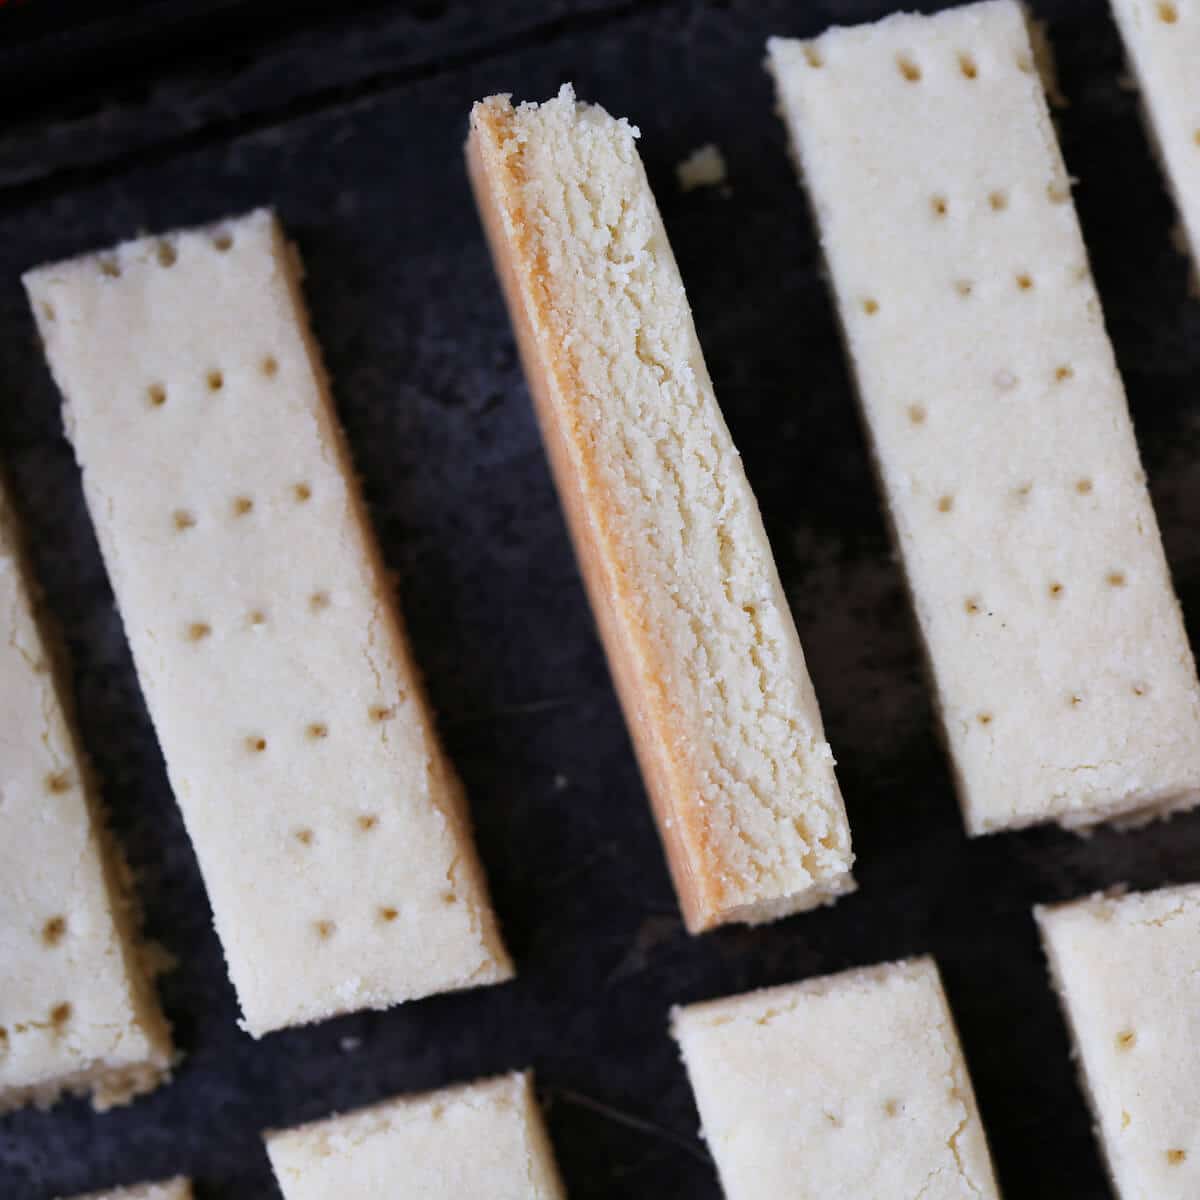 https://cheflindseyfarr.com/wp-content/uploads/2022/10/traditional-scottish-shortbread-lovely-texture.jpg